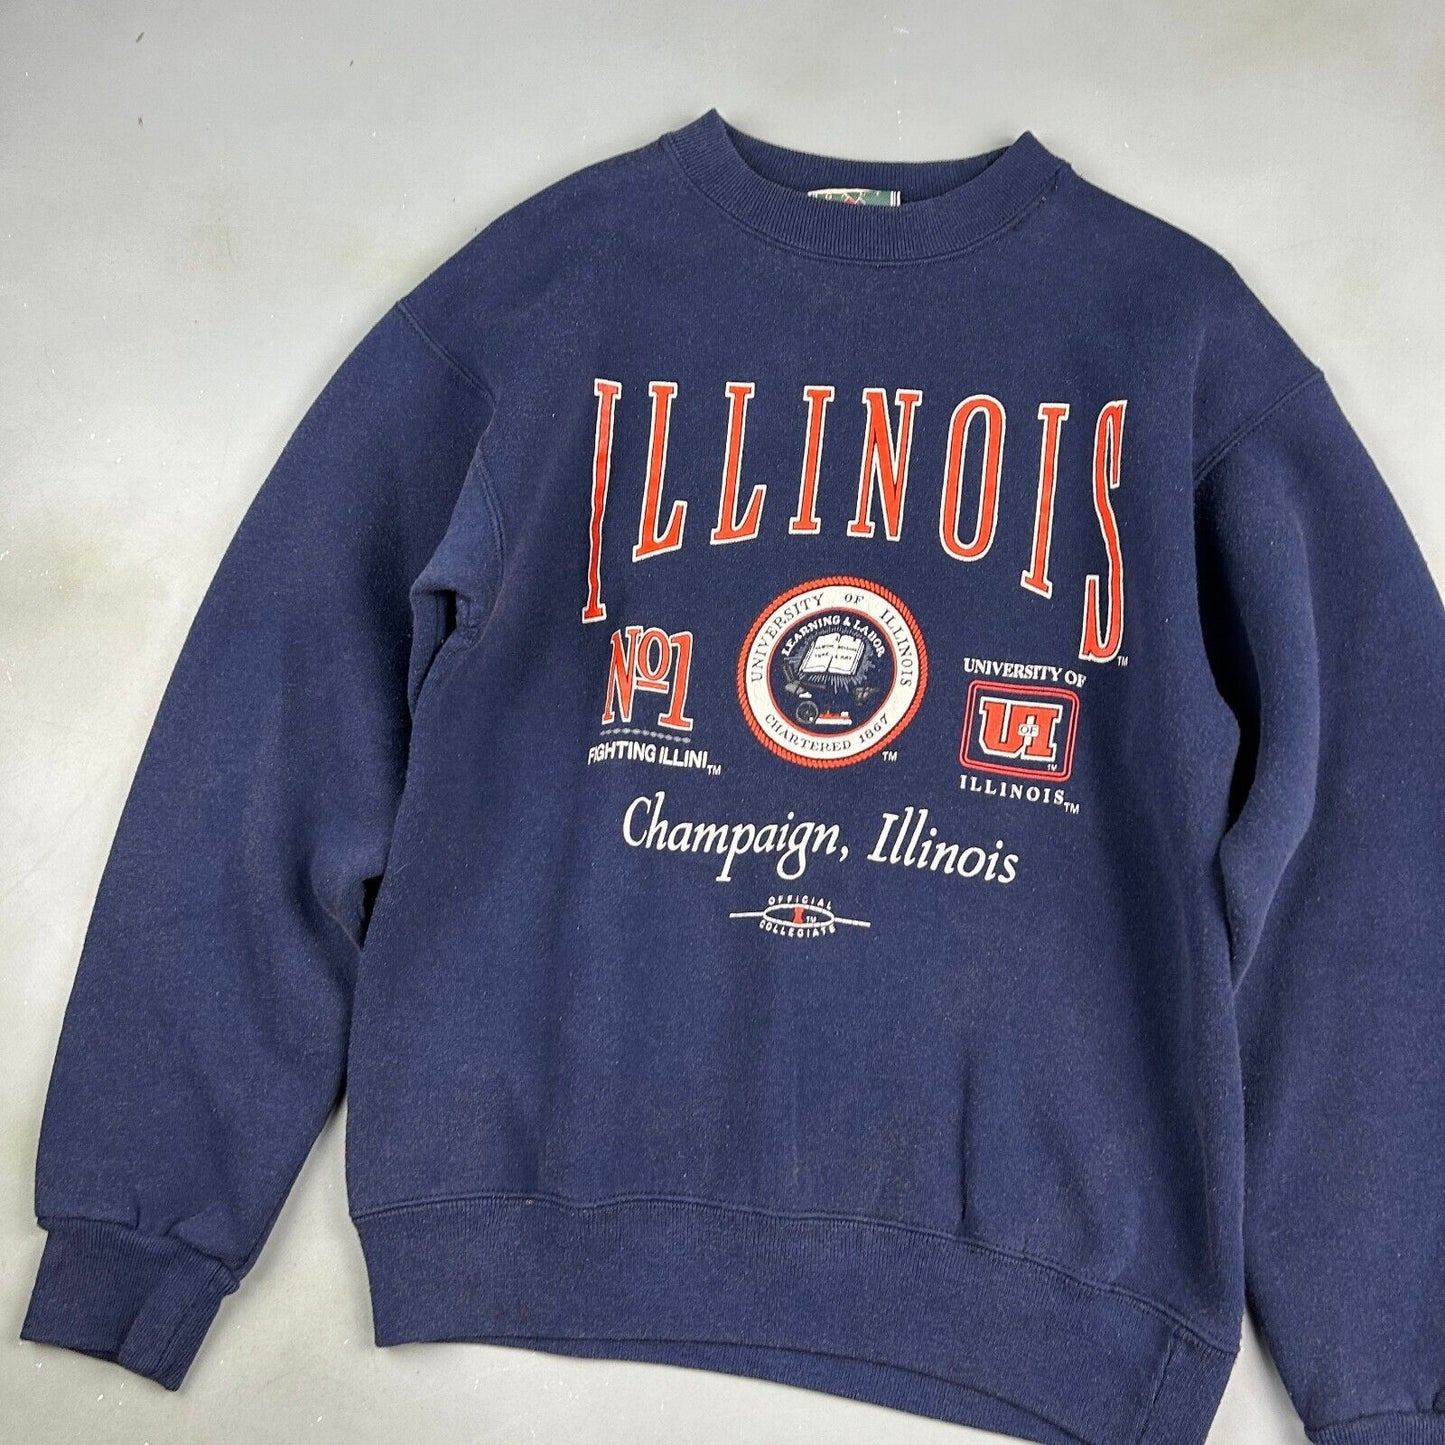 VINTAGE 90s Illinois University Navy Crewneck Sweater sz Youth L / XS Adult